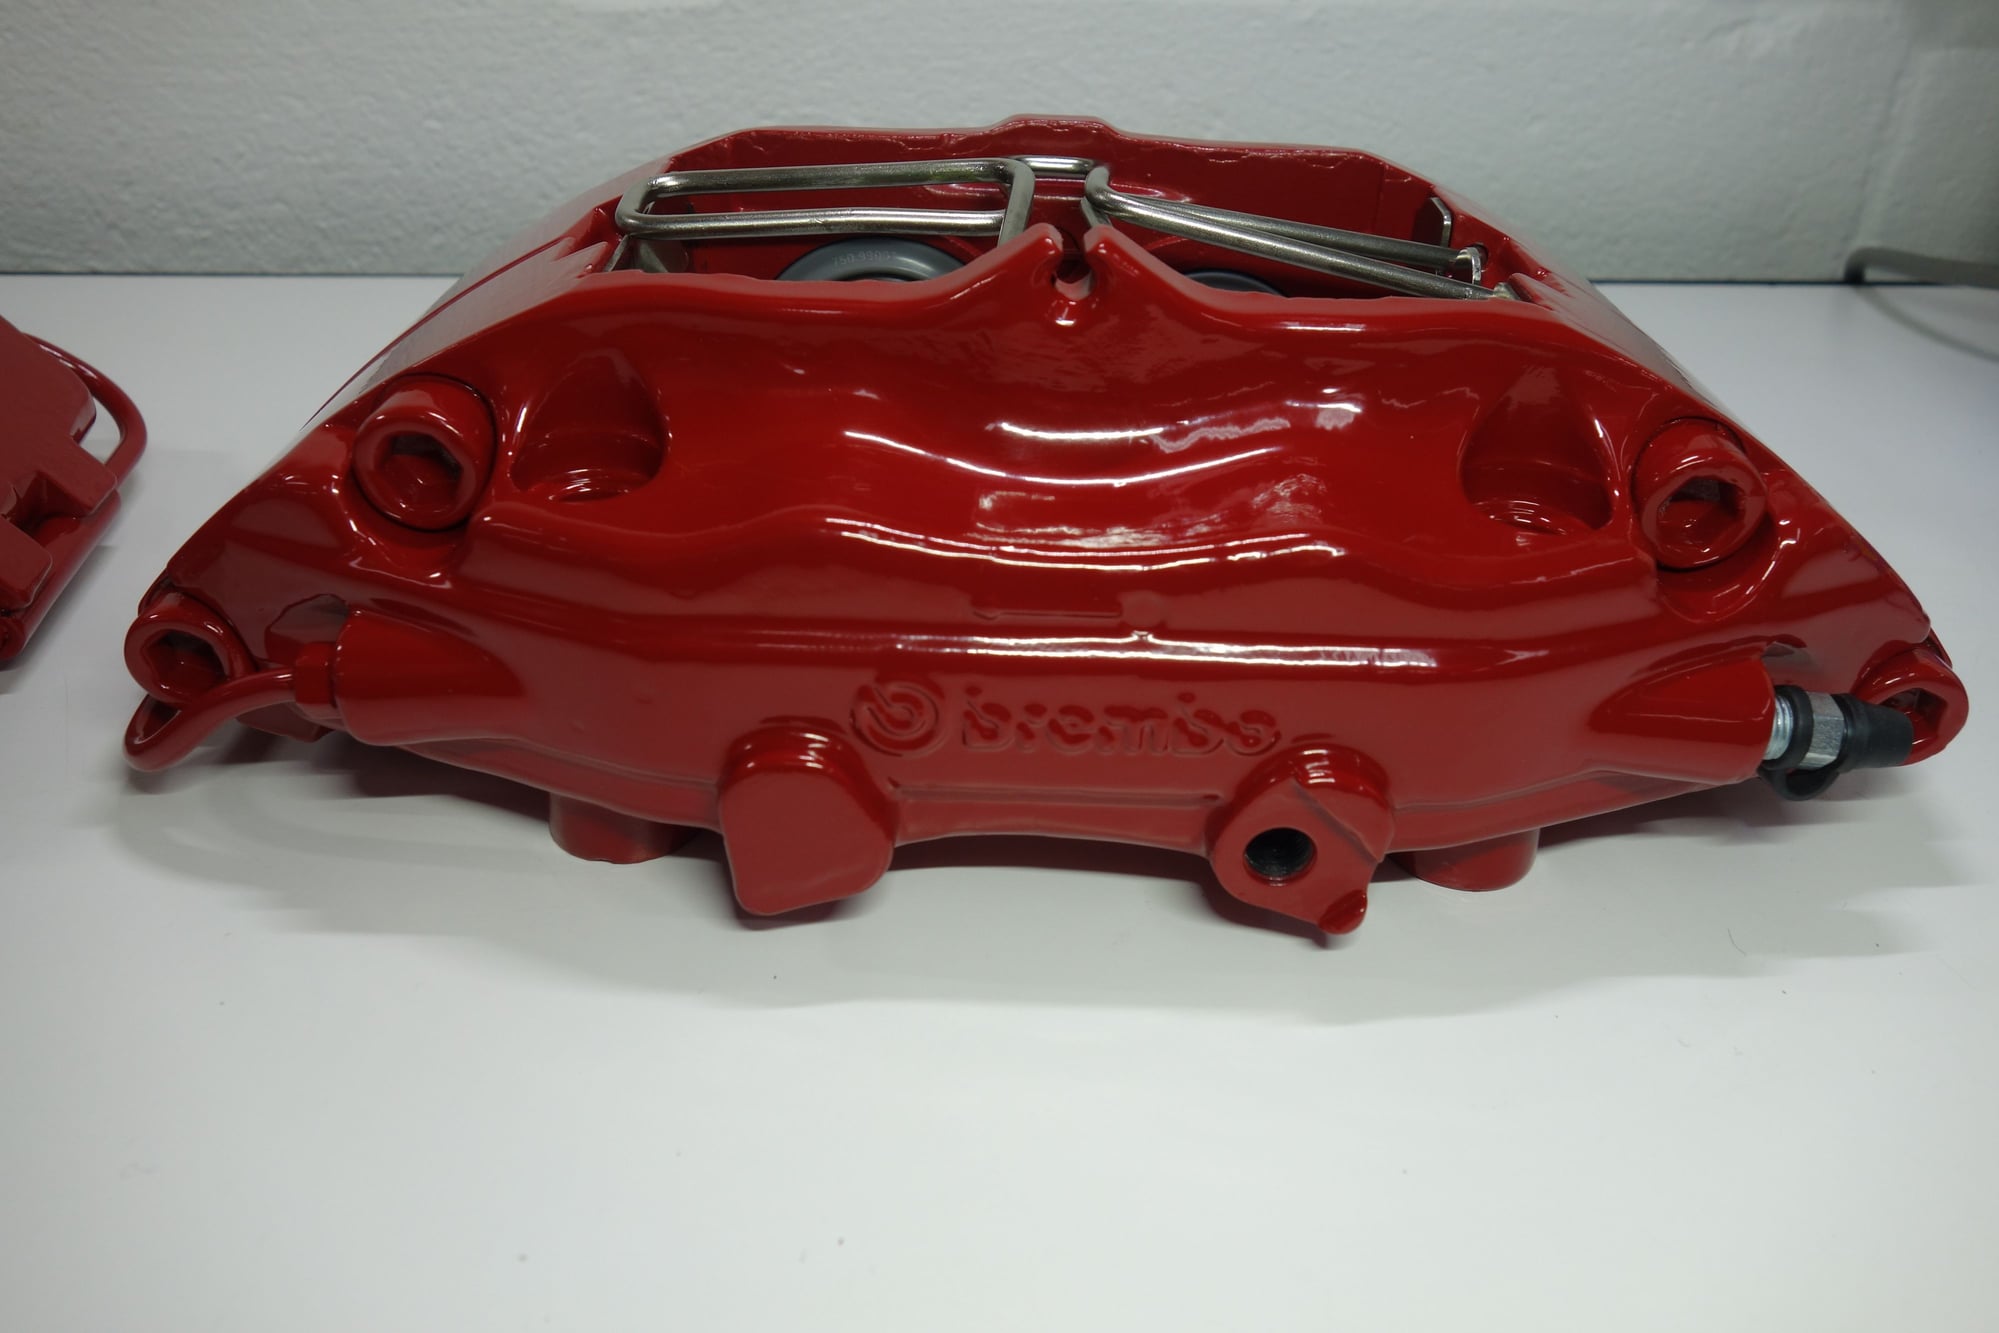 Brakes - 993TT Front brake calipers - "big reds" - Used - 0  All Models - Nashville, TN 37201, United States